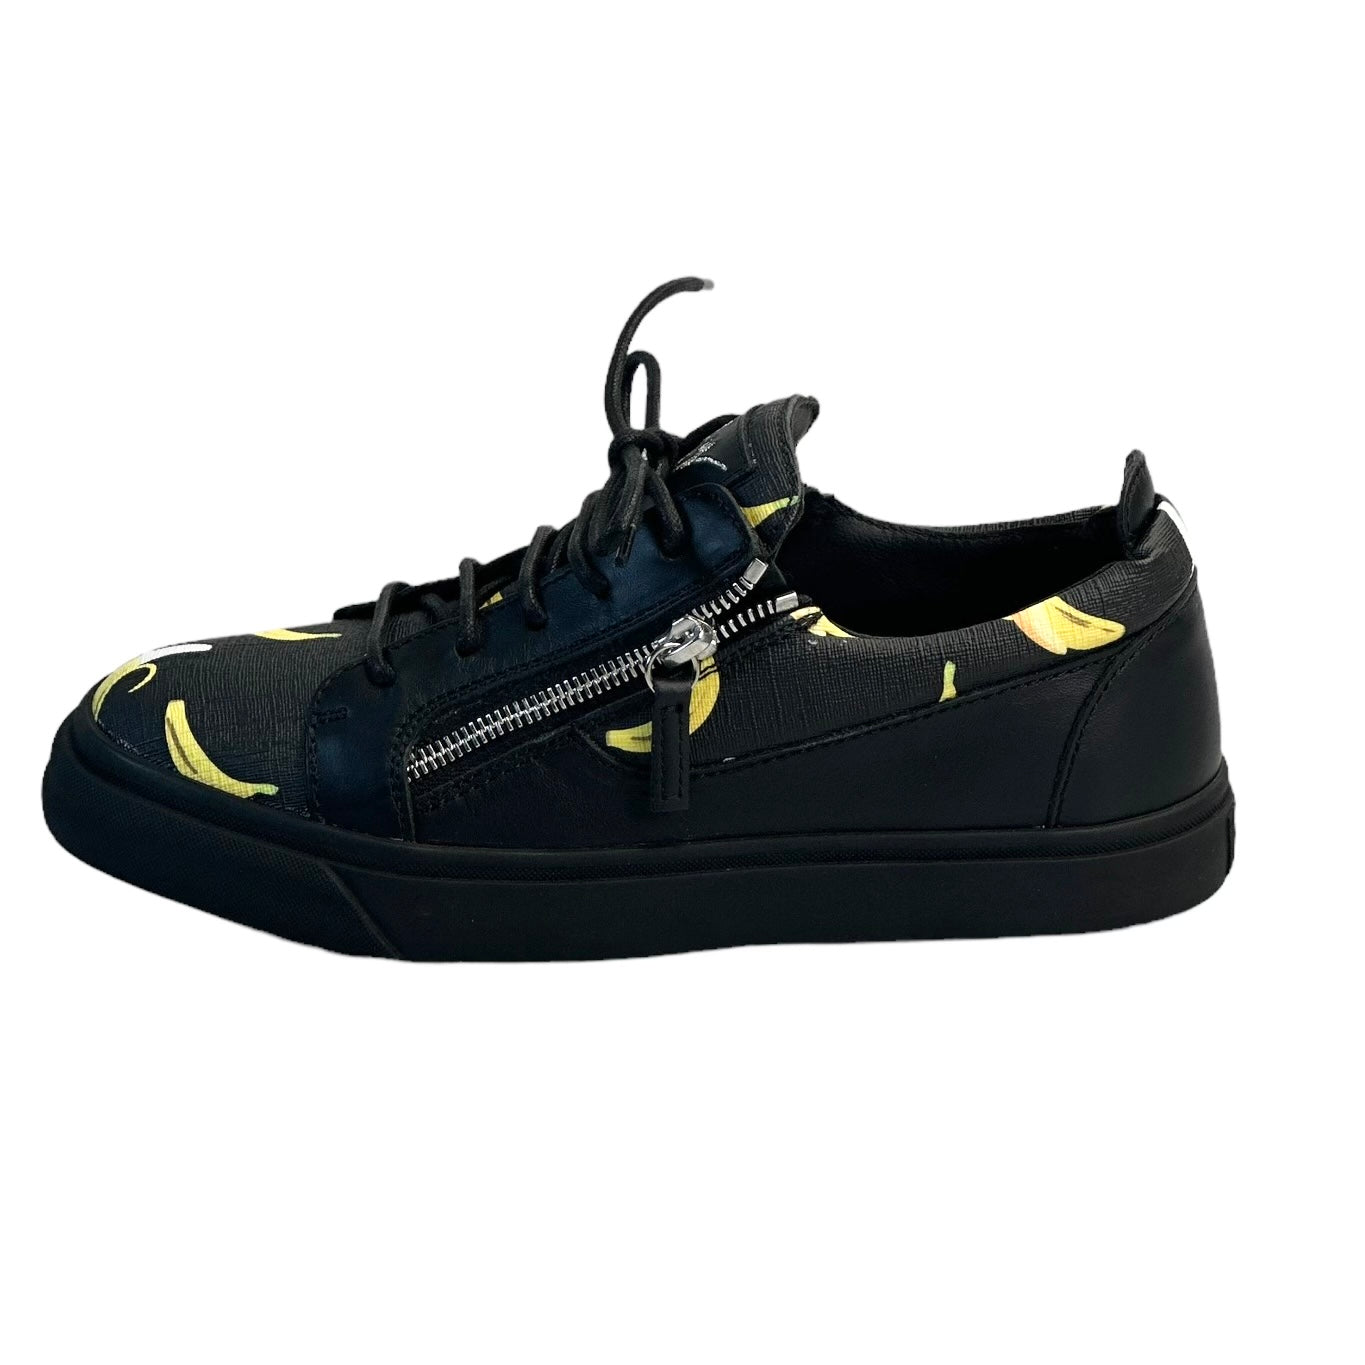 Giuseppe Zanotti Black Low top sneakers